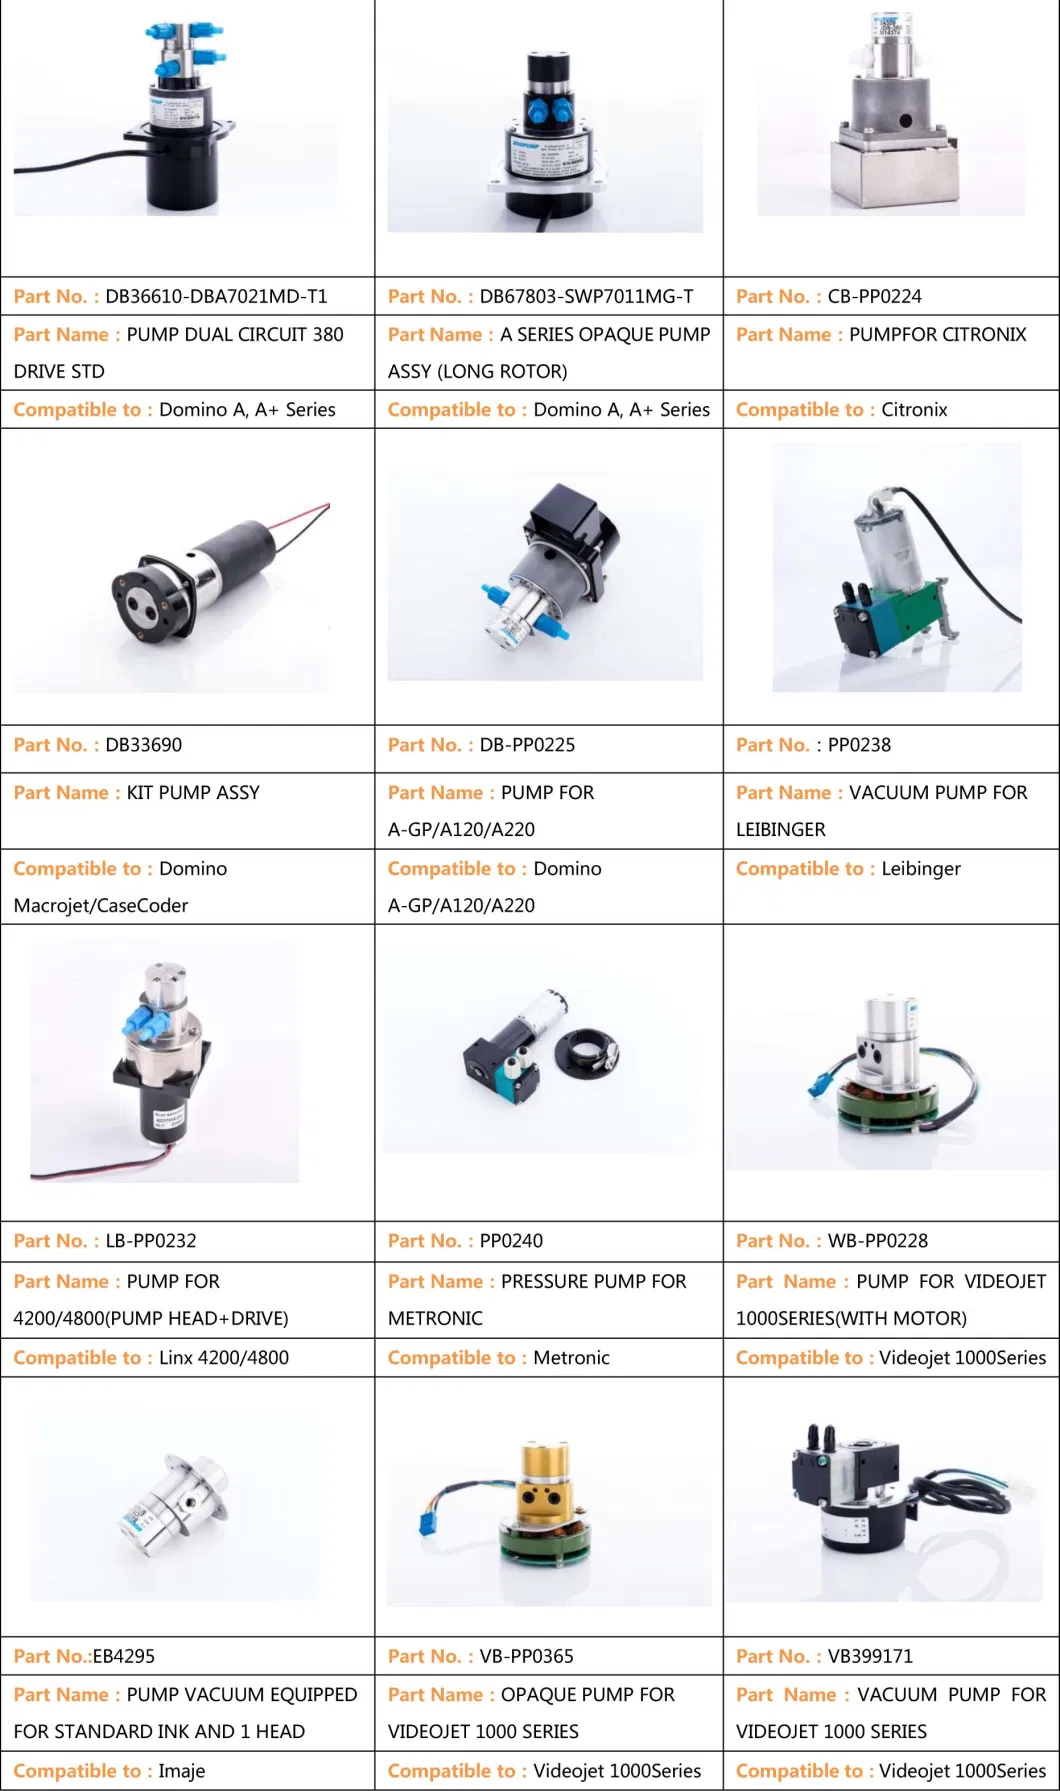 Docod a-Gp Alarm Light Kit (12-PIN 24V WITH BUZZER) for Domino Cij Machinery Spare Parts